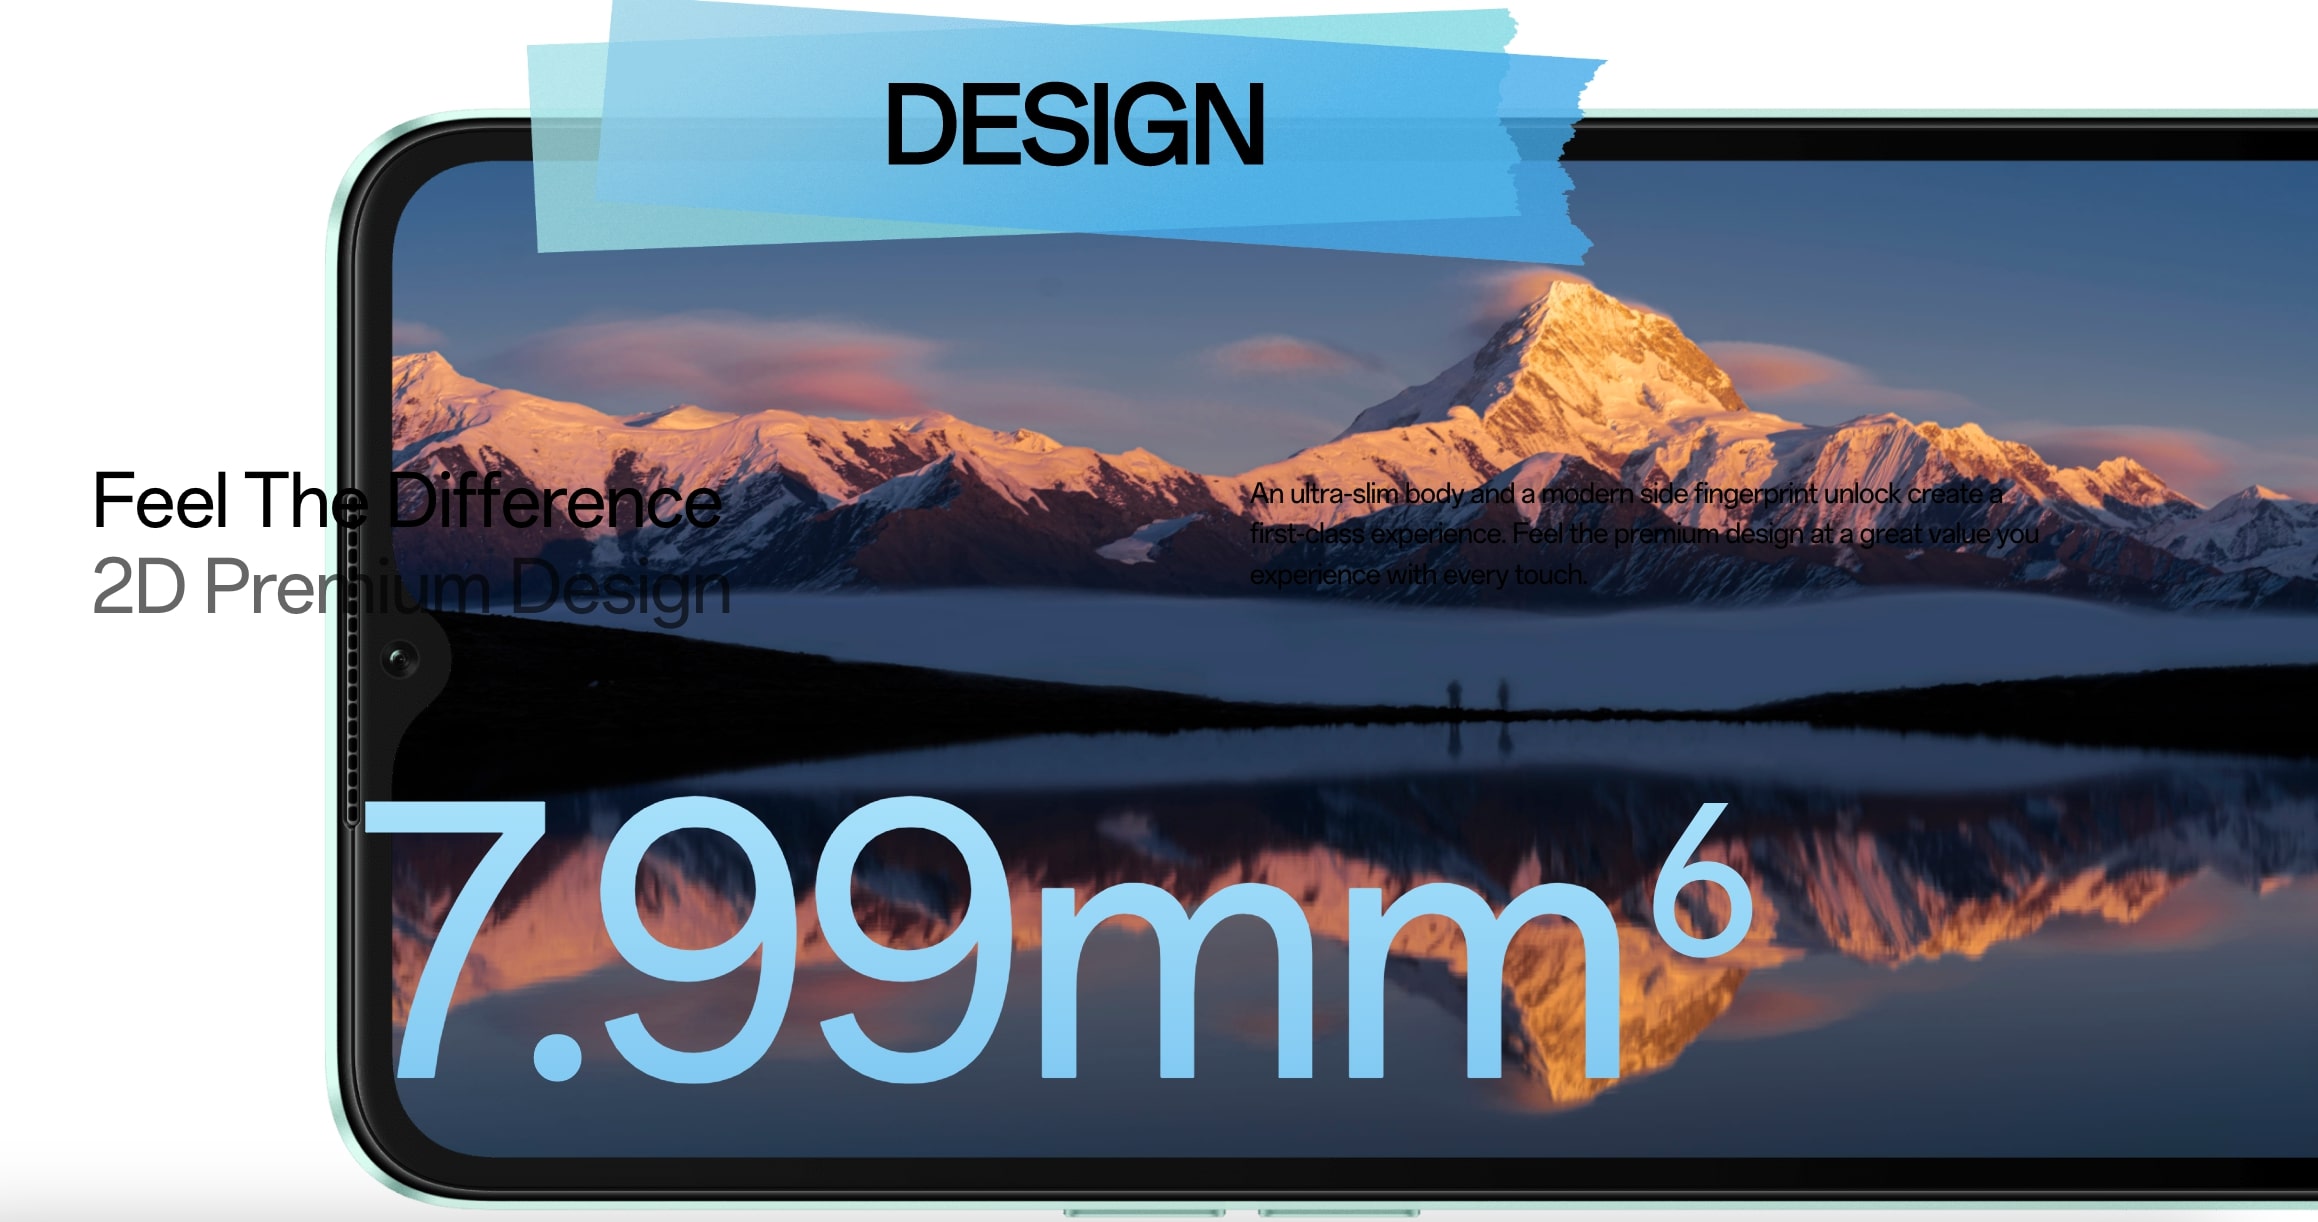 Oppo-A57-4GB-64GB-Glowing-Black-Product-Description-4